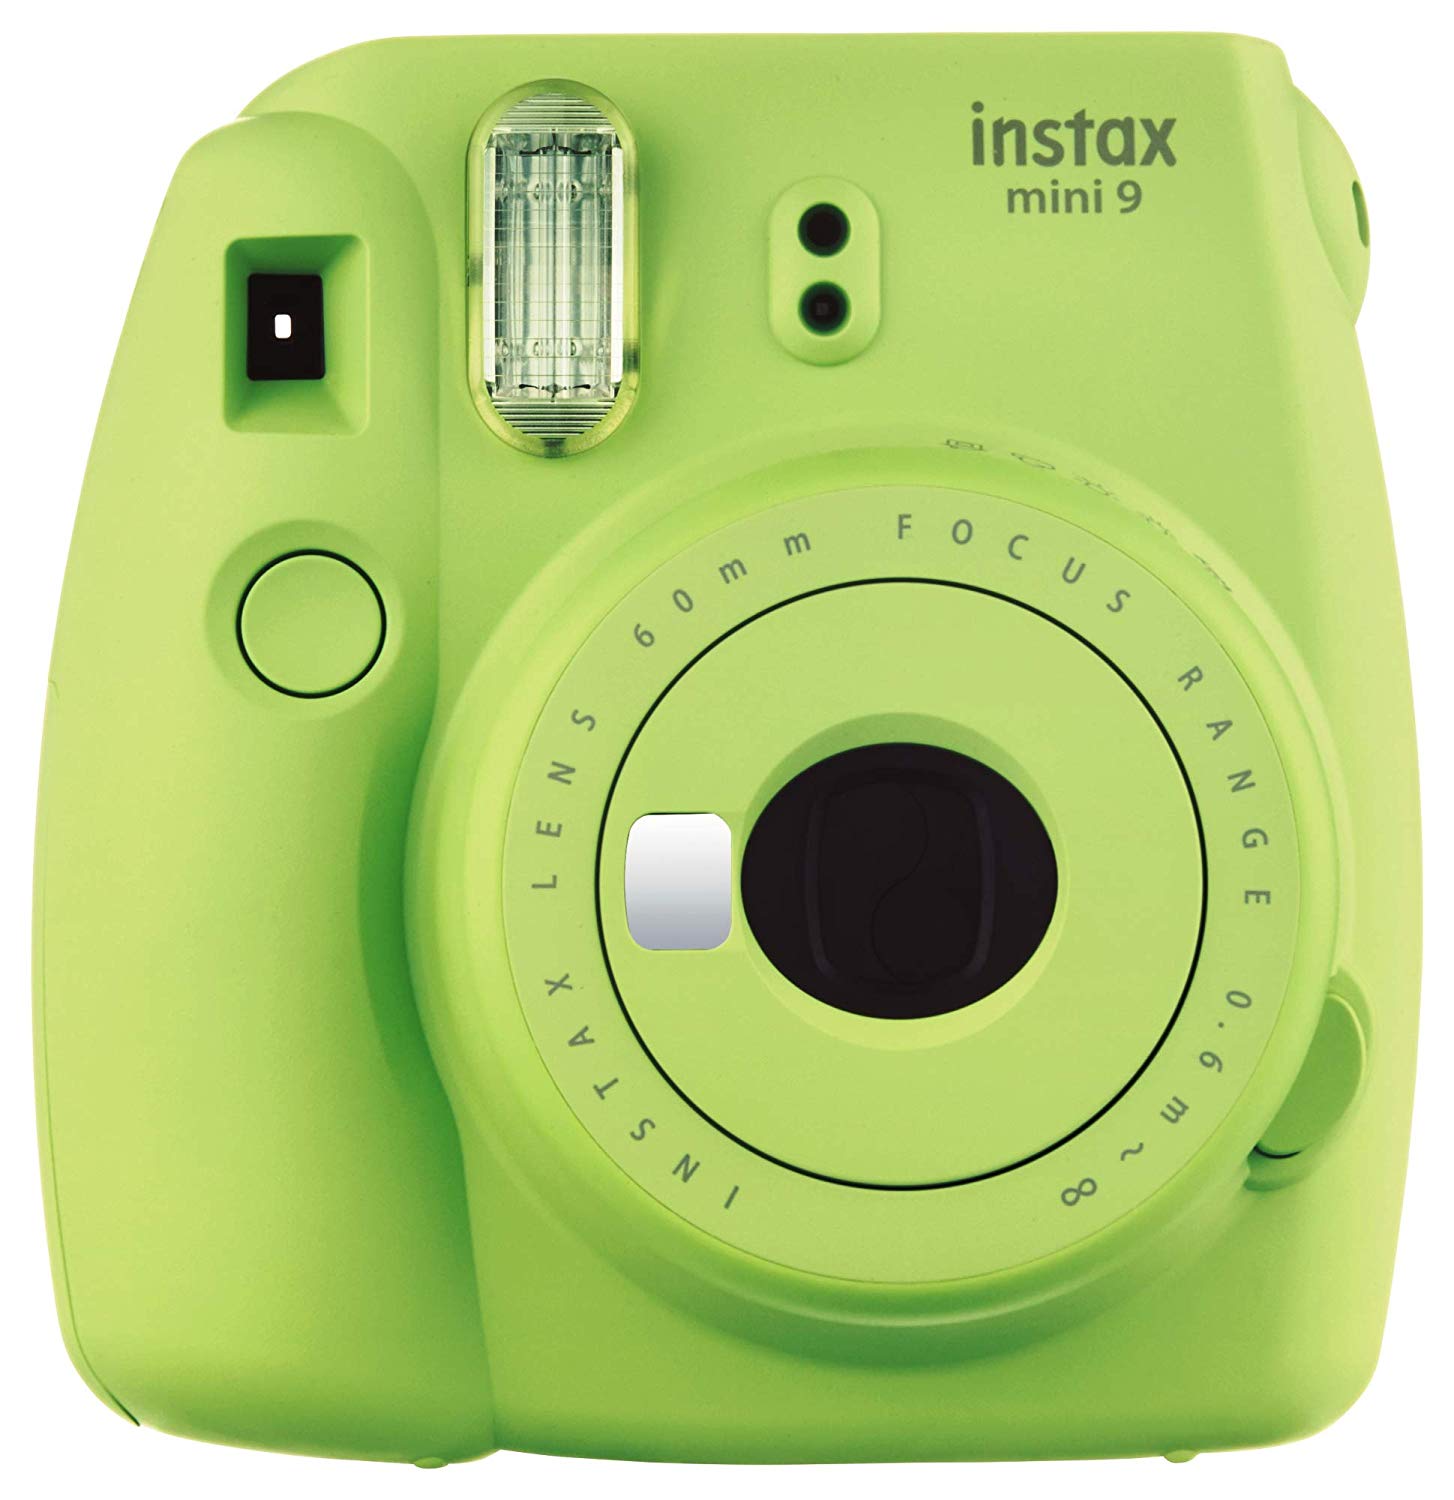 Lime Green Fujifilm Instax Mini 9 product shot